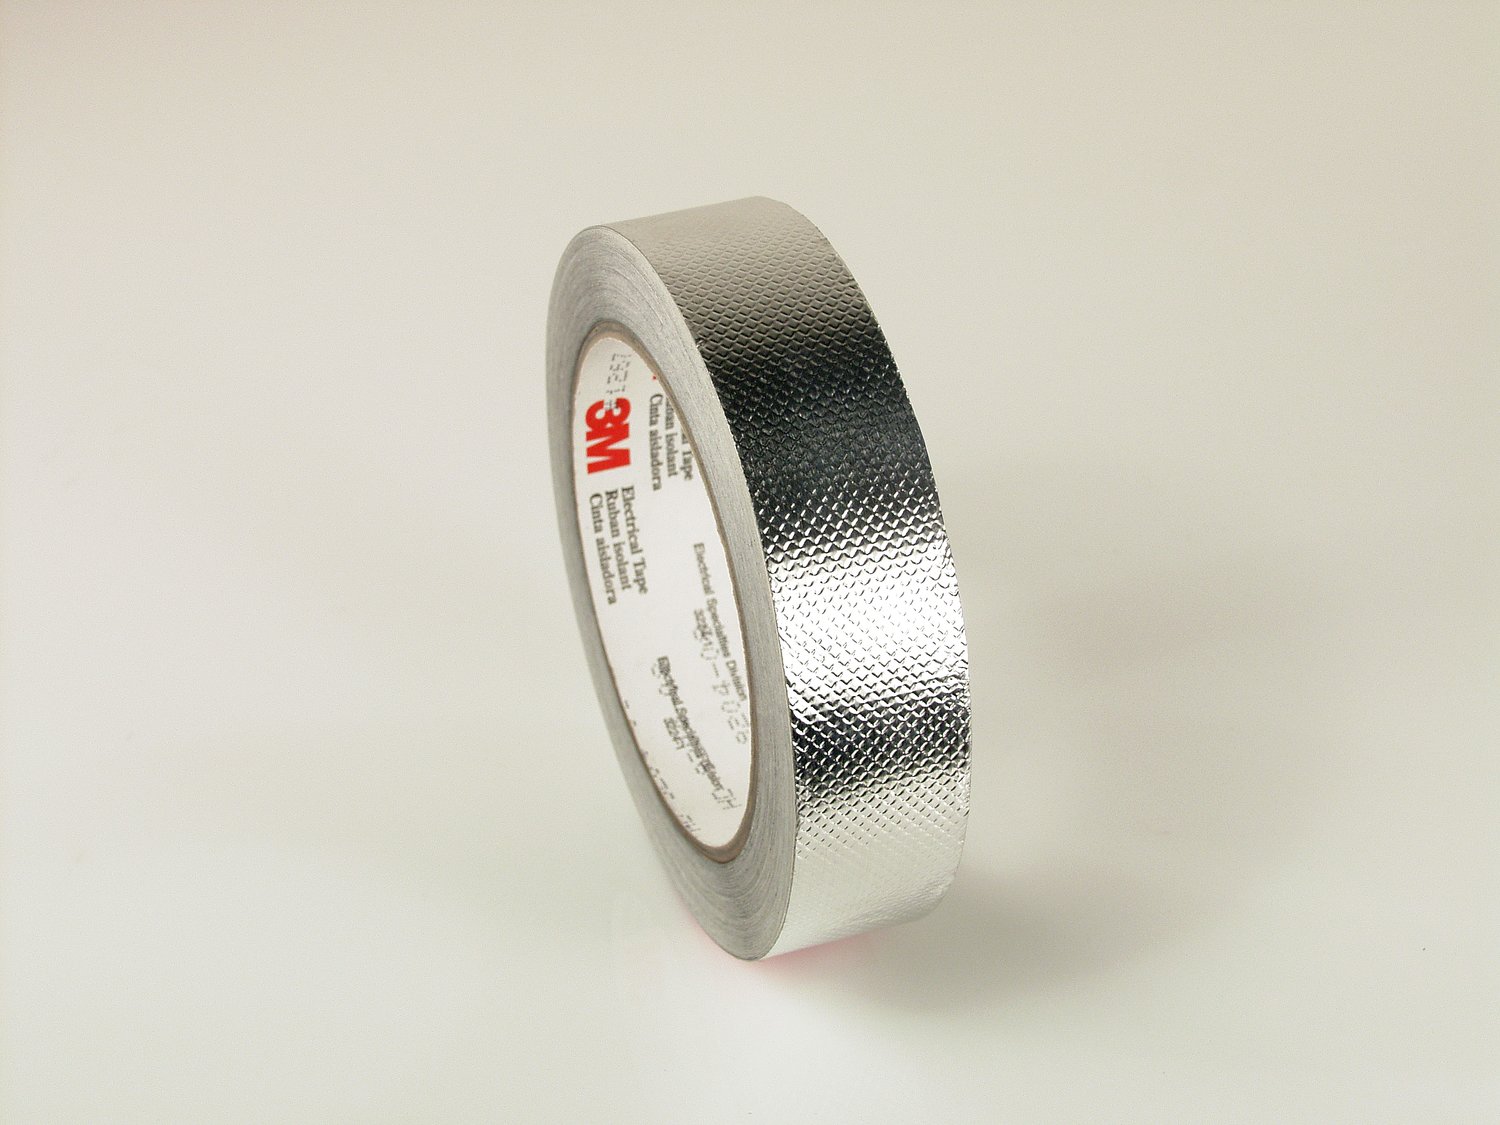 7010398759 - 3M Embossed Aluminum Foil EMI Shielding Tape 1267, 1 in x 18 yd, 3 in
Paper Core, 9 Rolls/Case